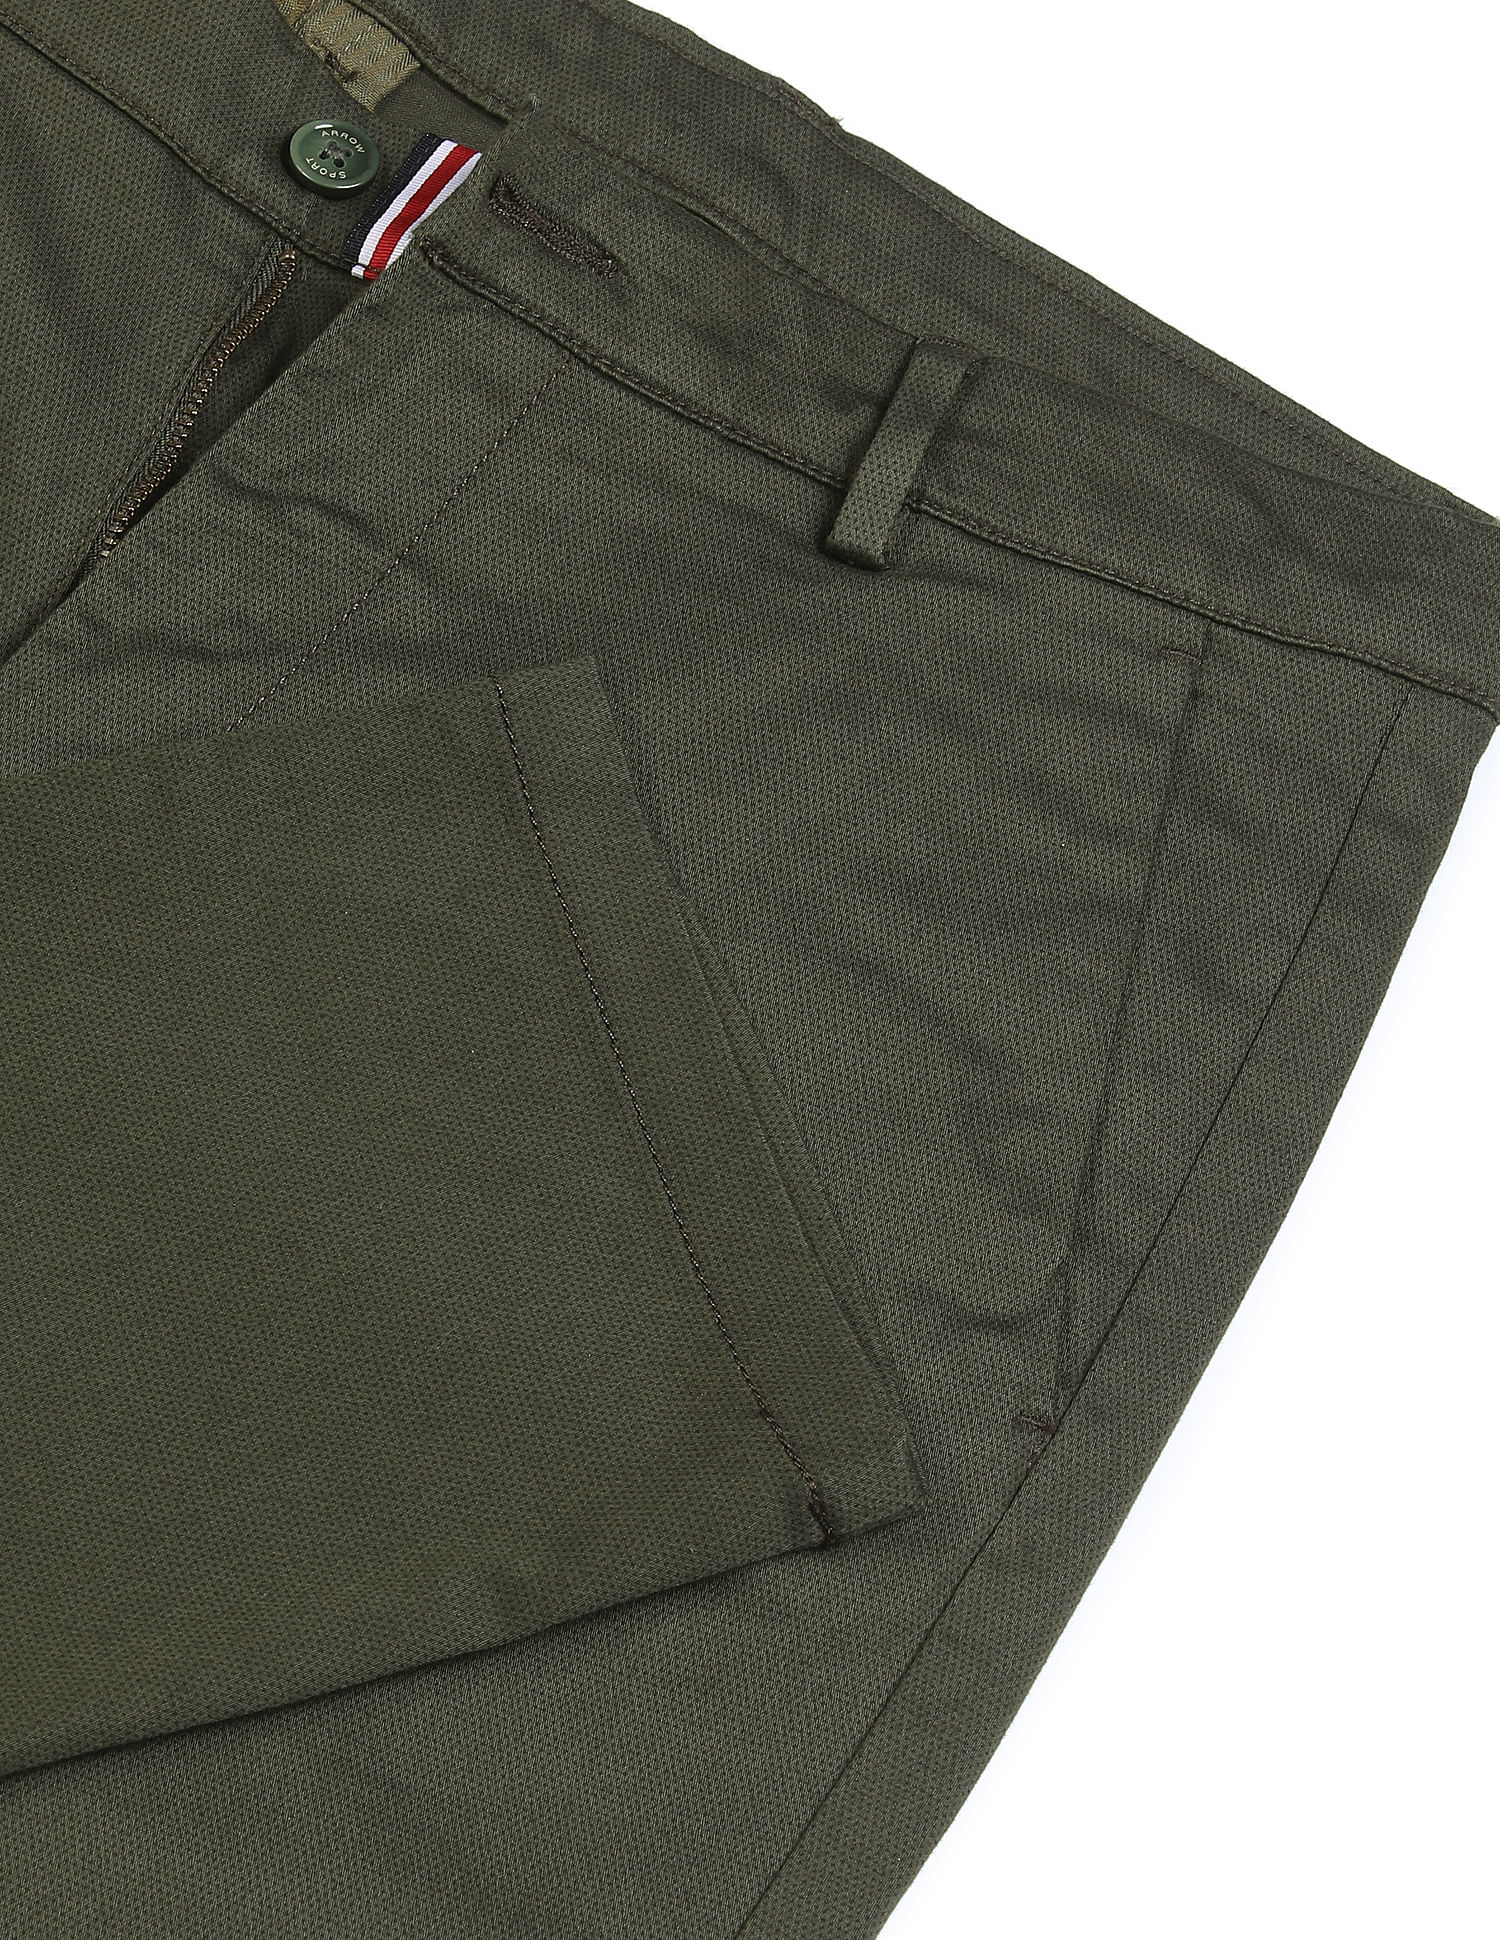 Dark Green Pants Womens : Target